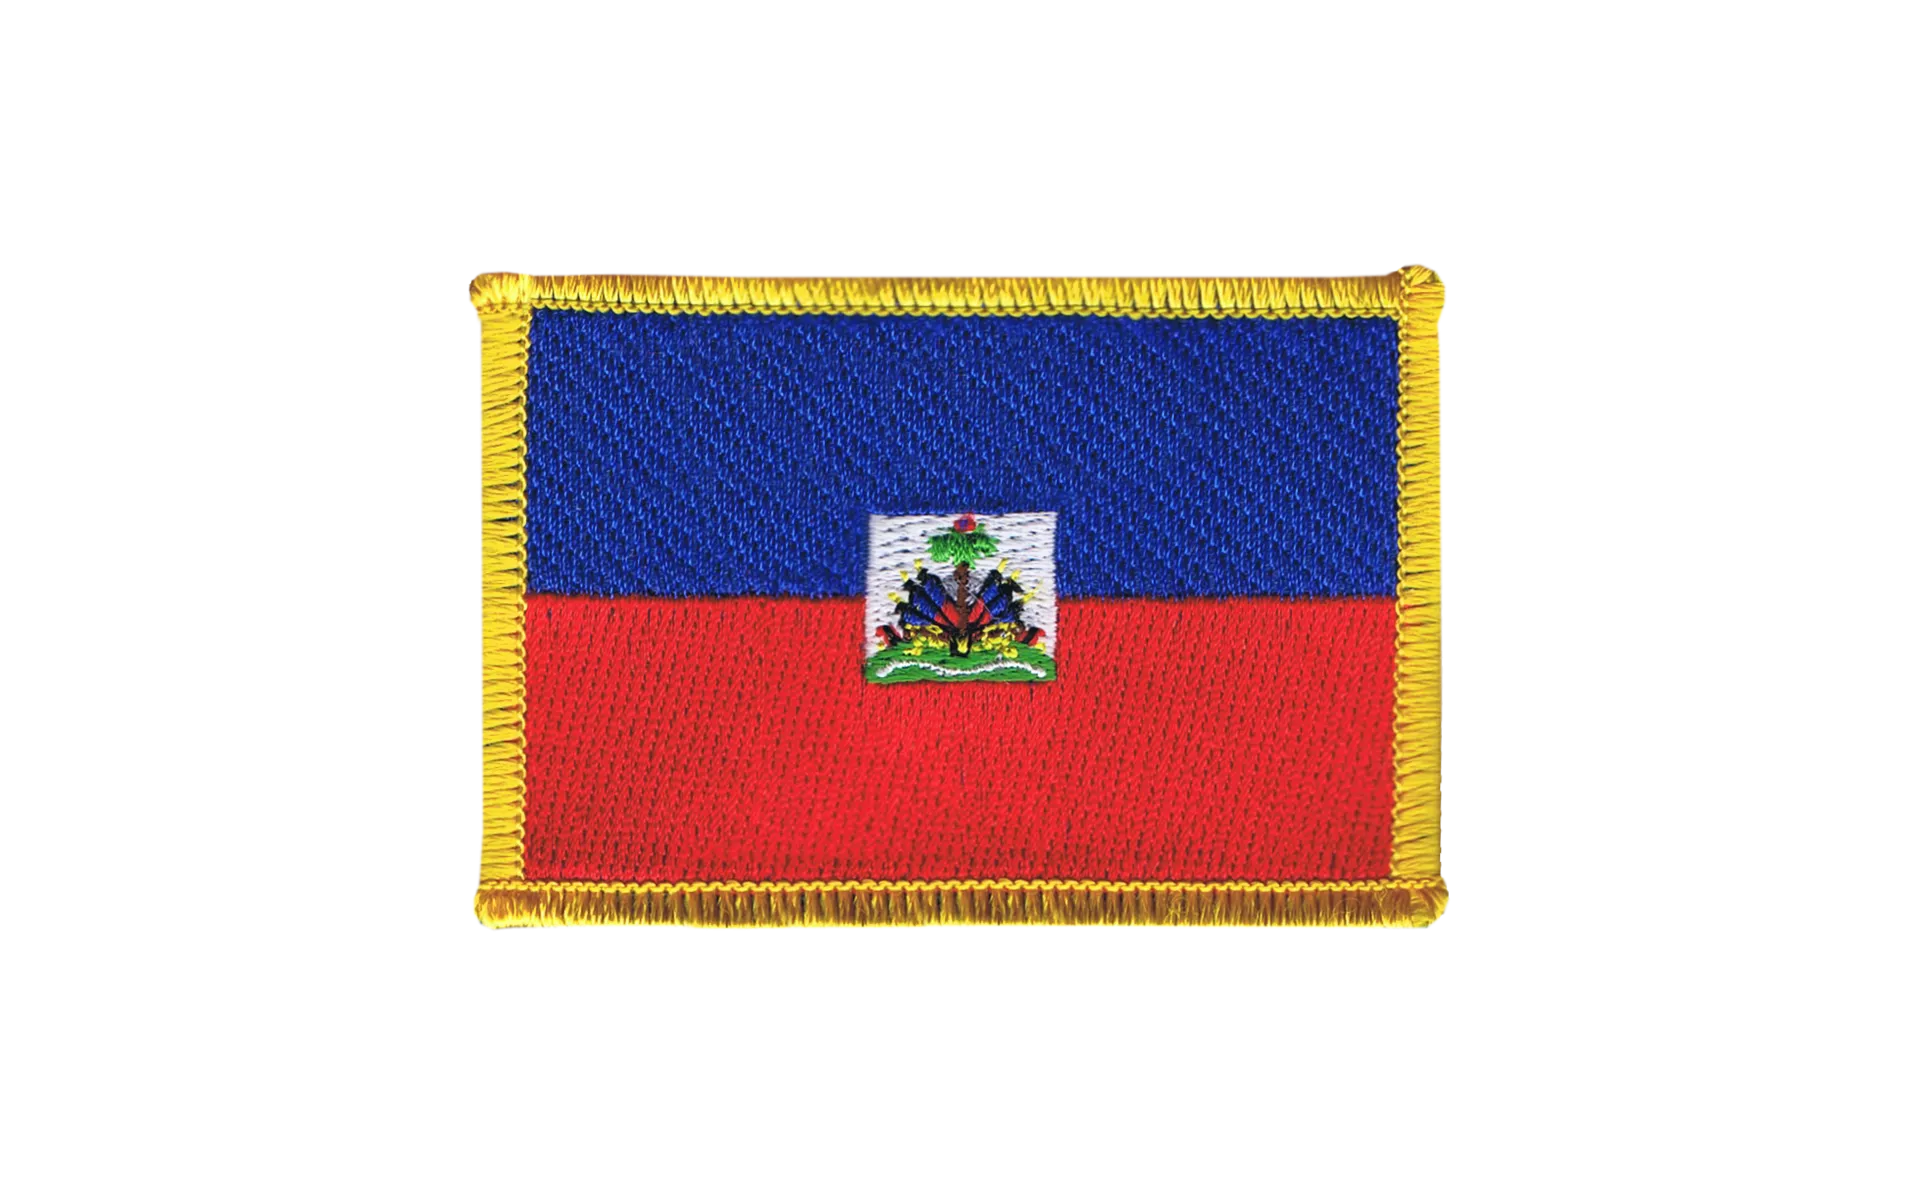 Haiti Aufnäher gestickt,Flagge Fahne,Patch,Aufbügler,6,5cm,neu